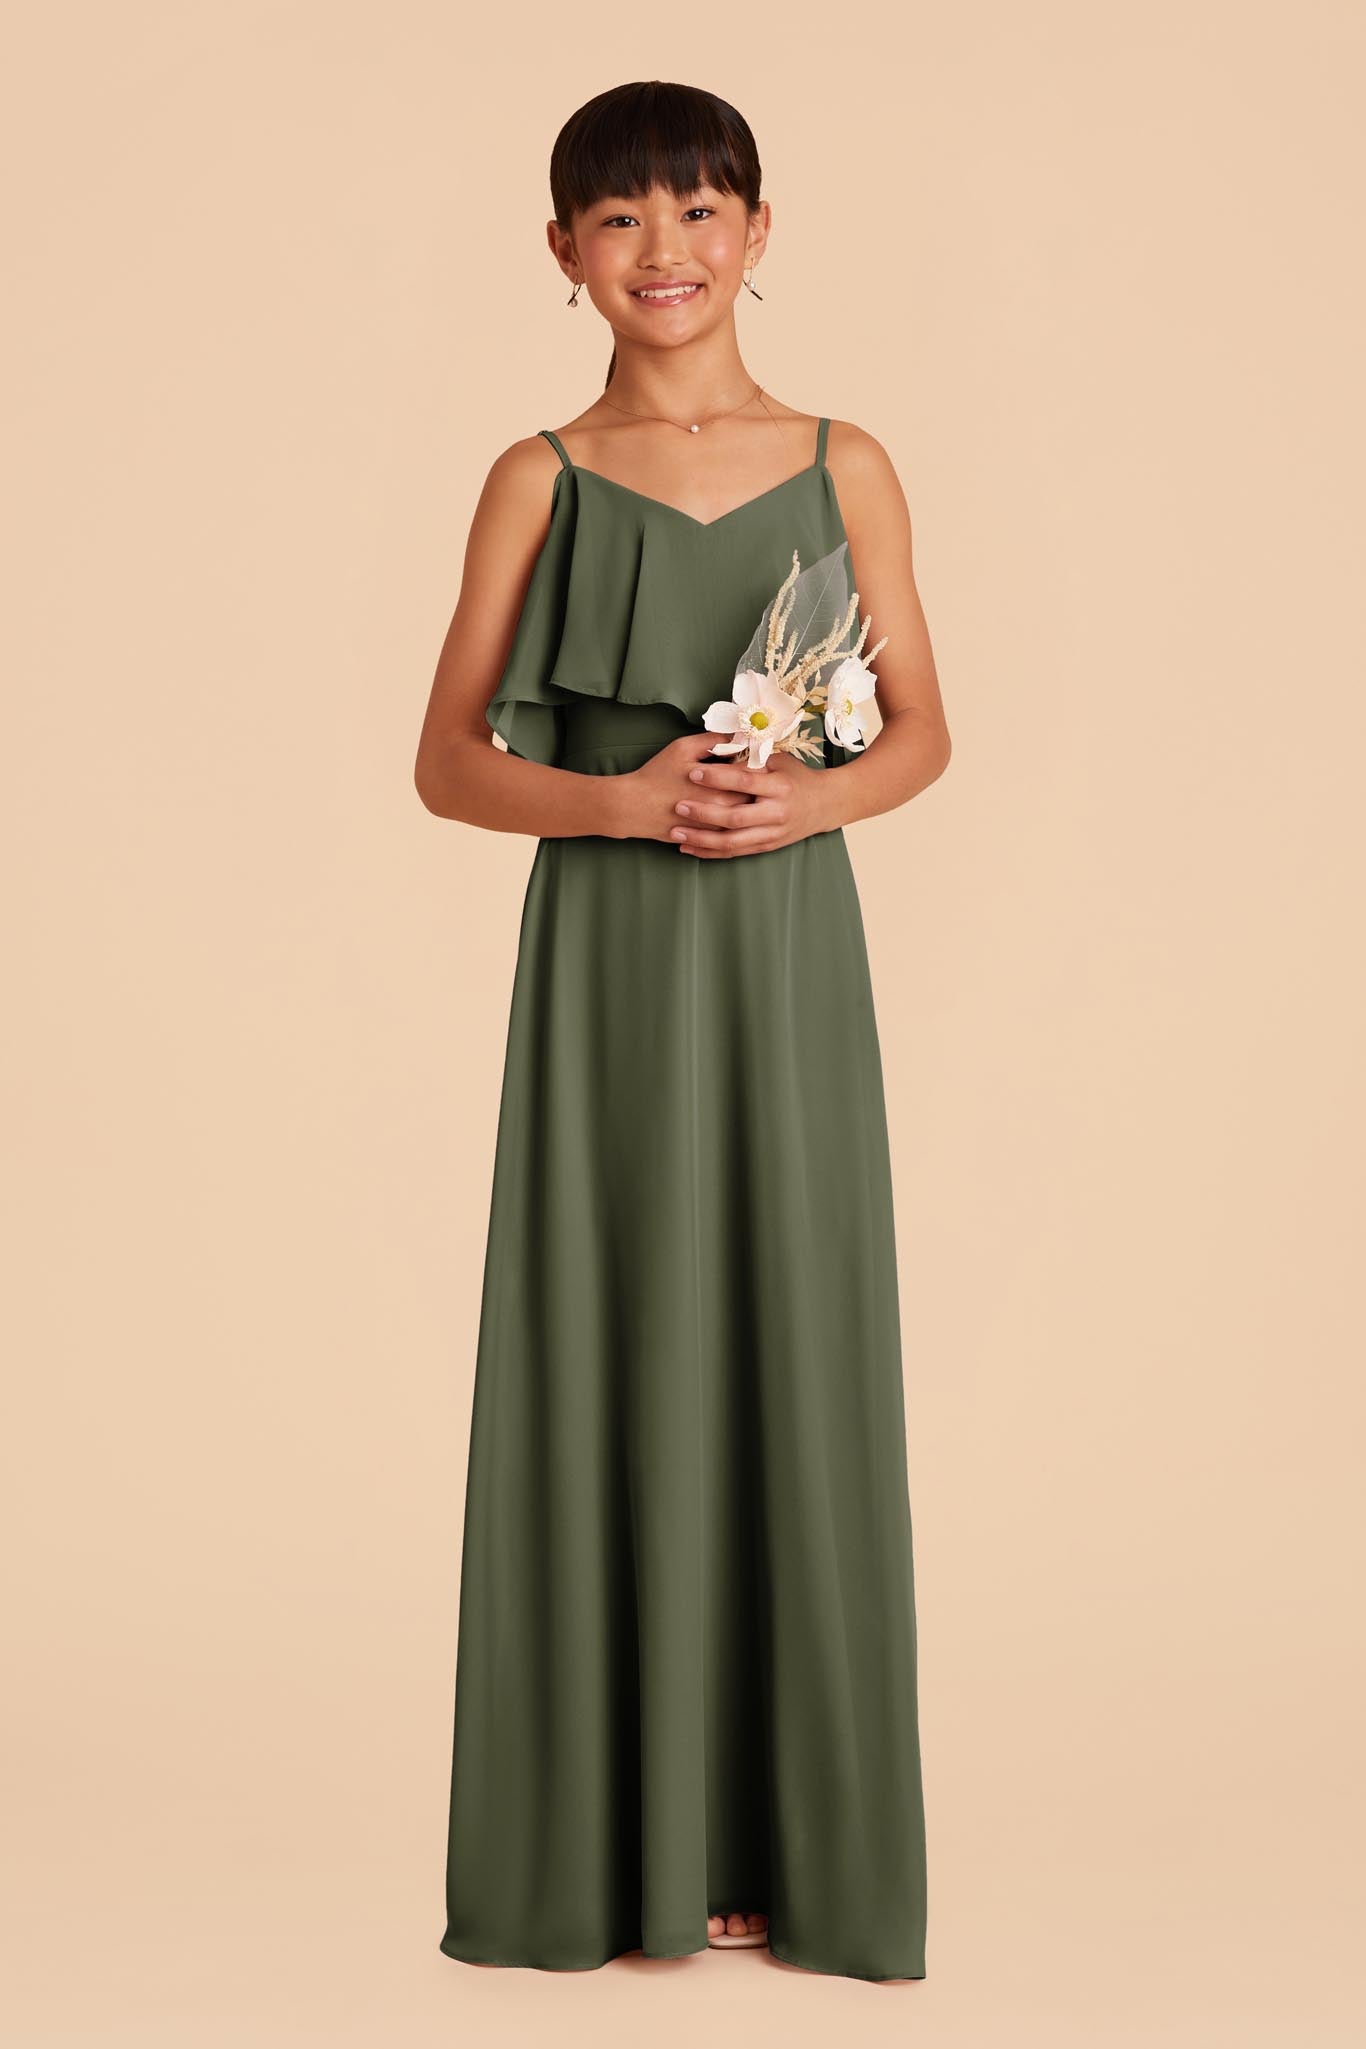 Olive Janie Convertible Junior Dress by Birdy Grey